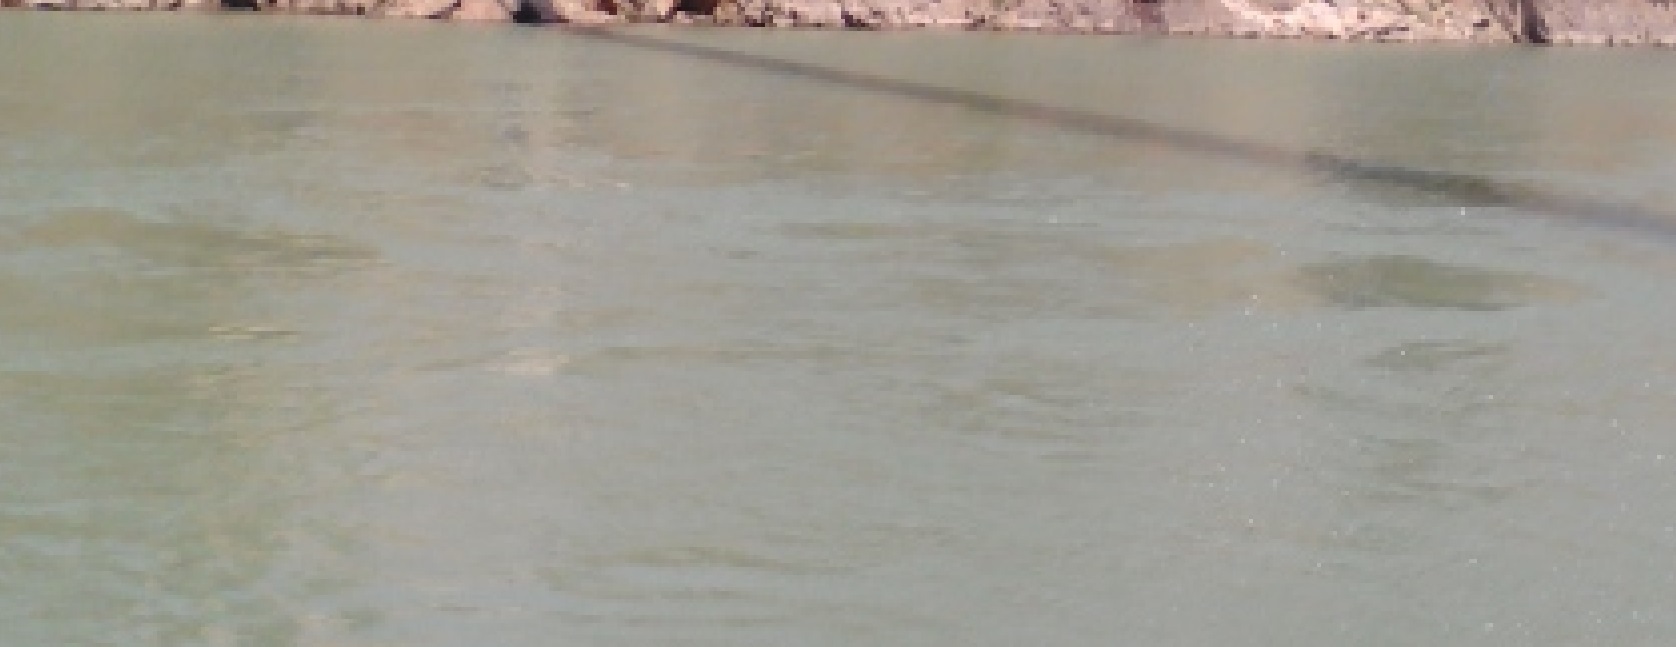 Fateh Sagar Lake Udaipur Tour, Rajasthan